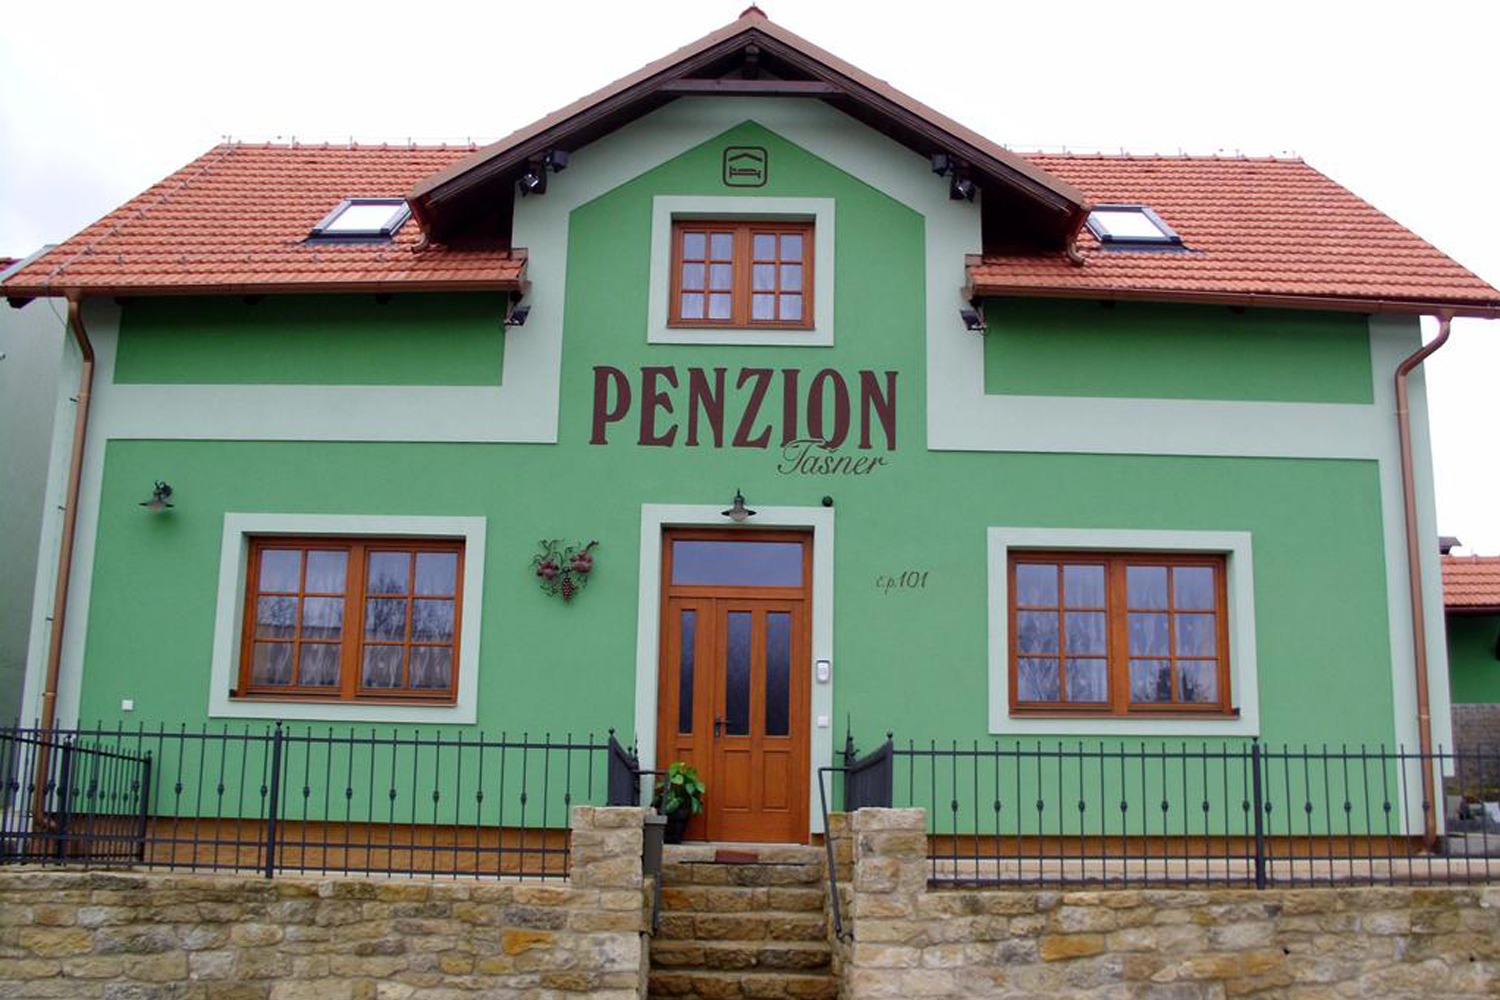 Penzion Tasner: Litomysl's Pretty Guesthouse